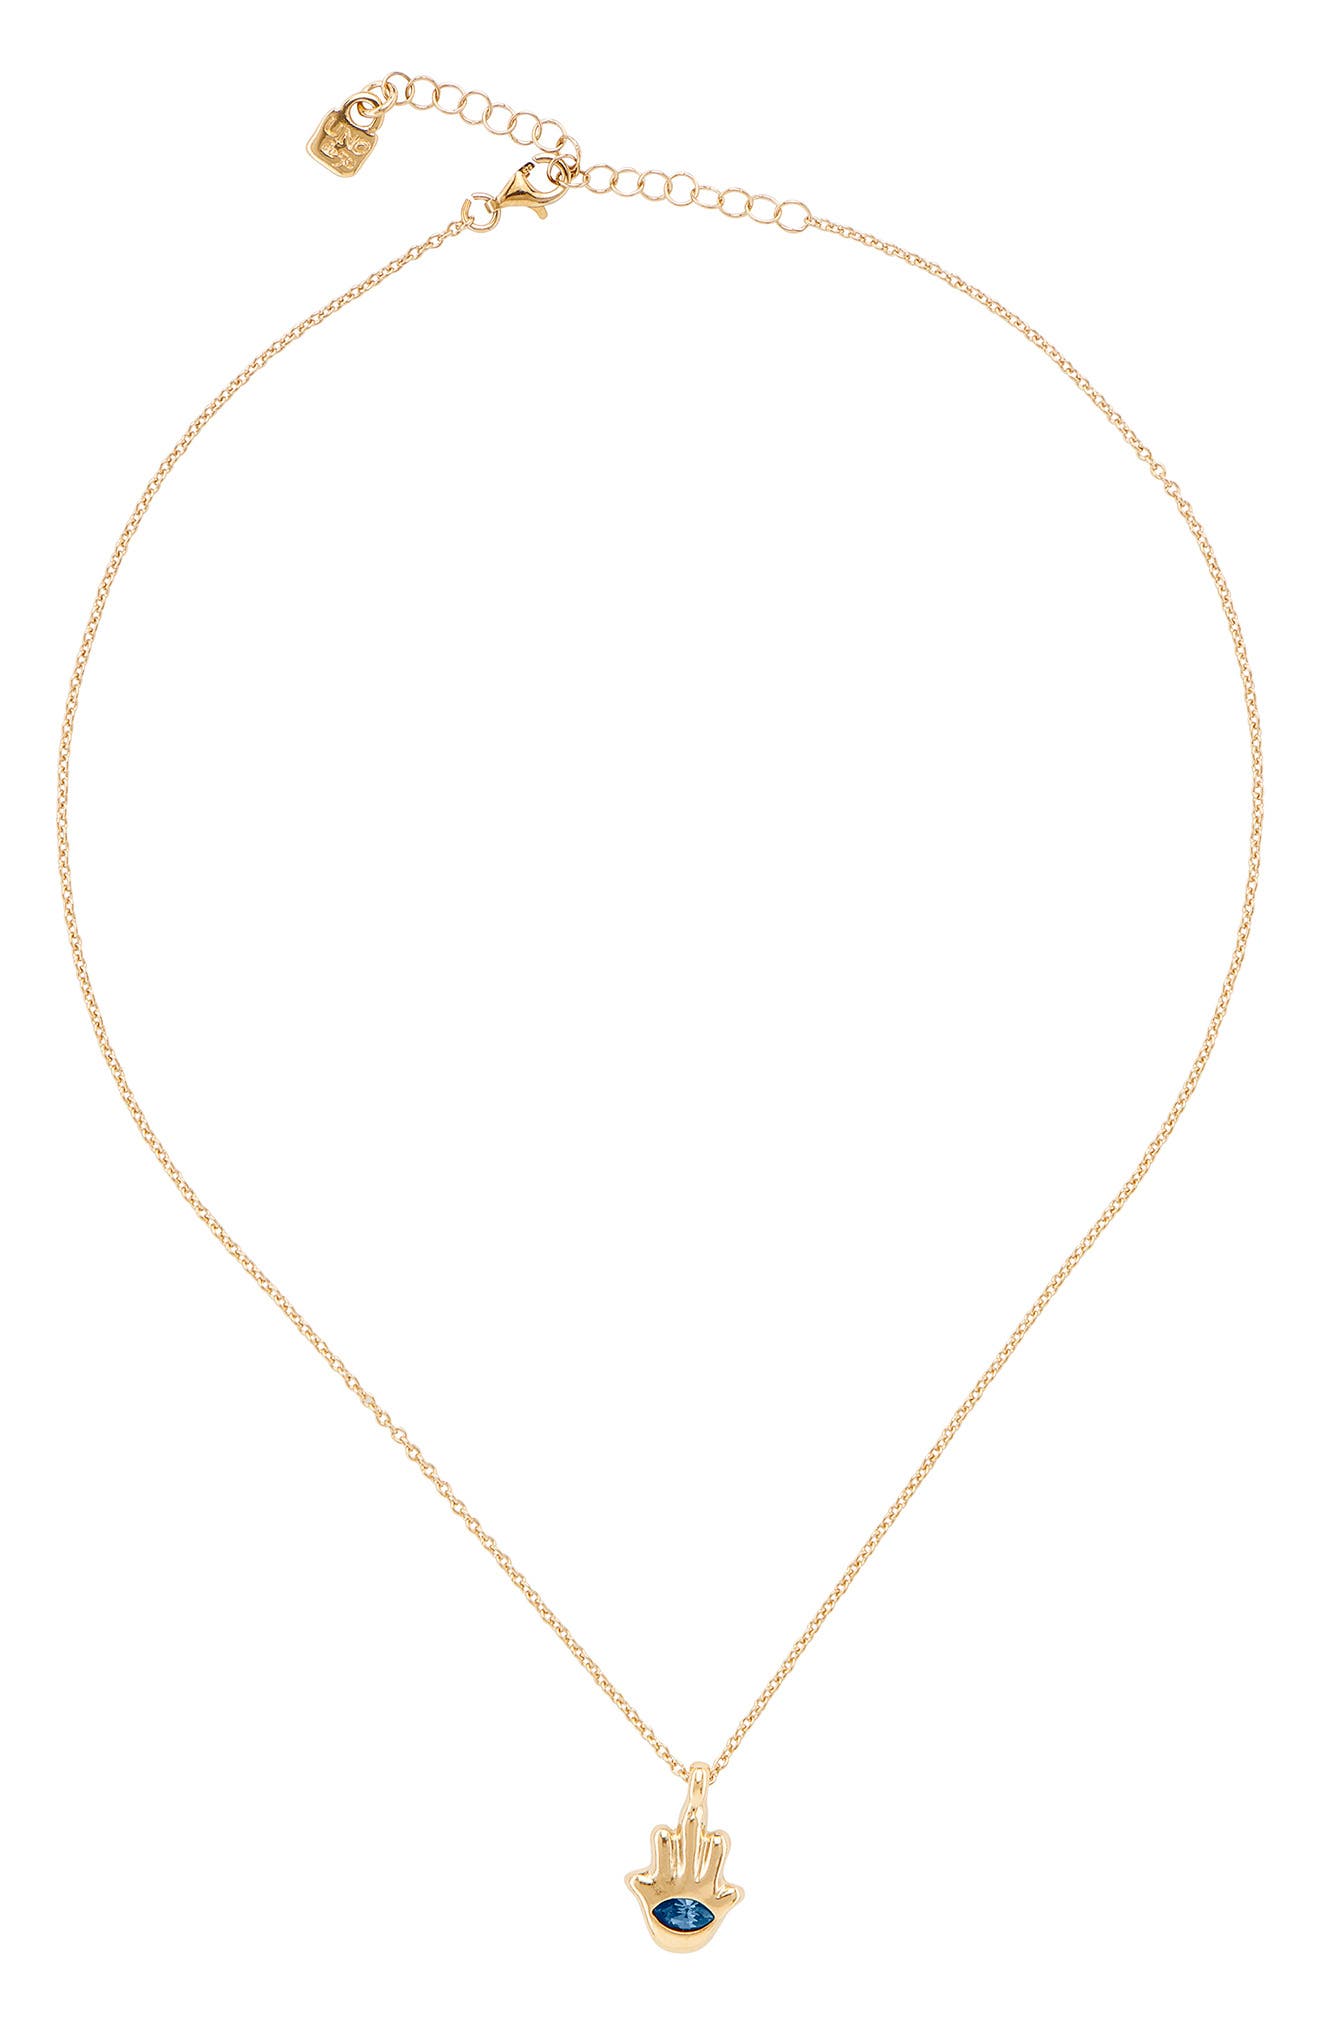 Unode50 Give Me 5 Gold Plated Swarovski Crystal Hamsa Pendant Necklace